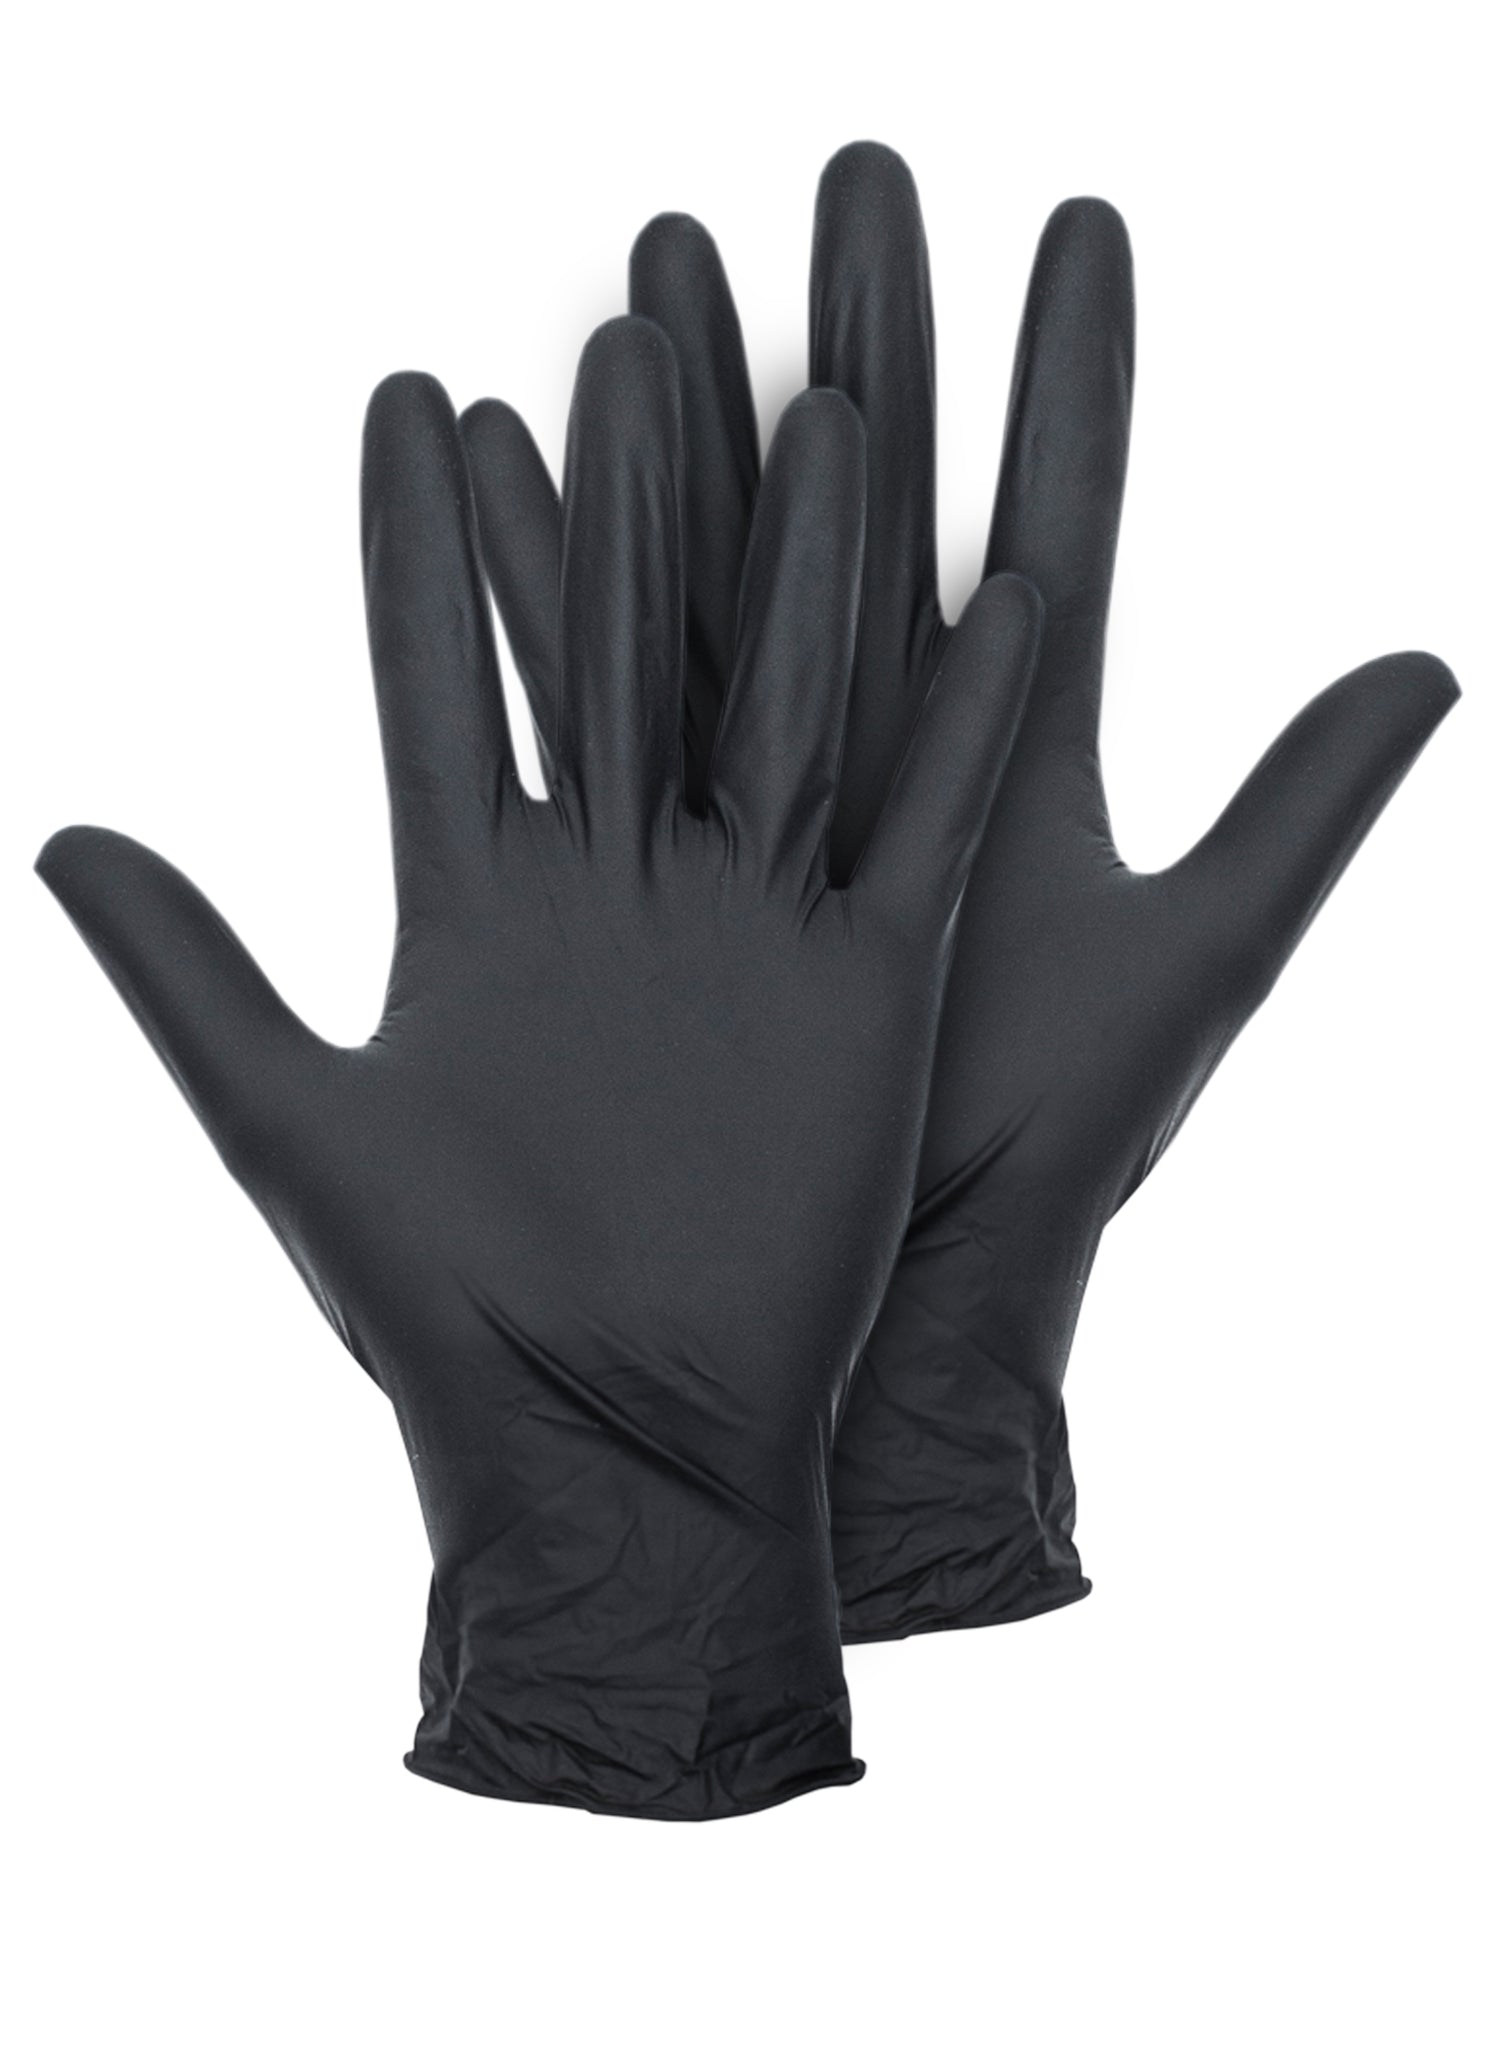 Montana - Black Latex Gloves dimensione media scatola di 100